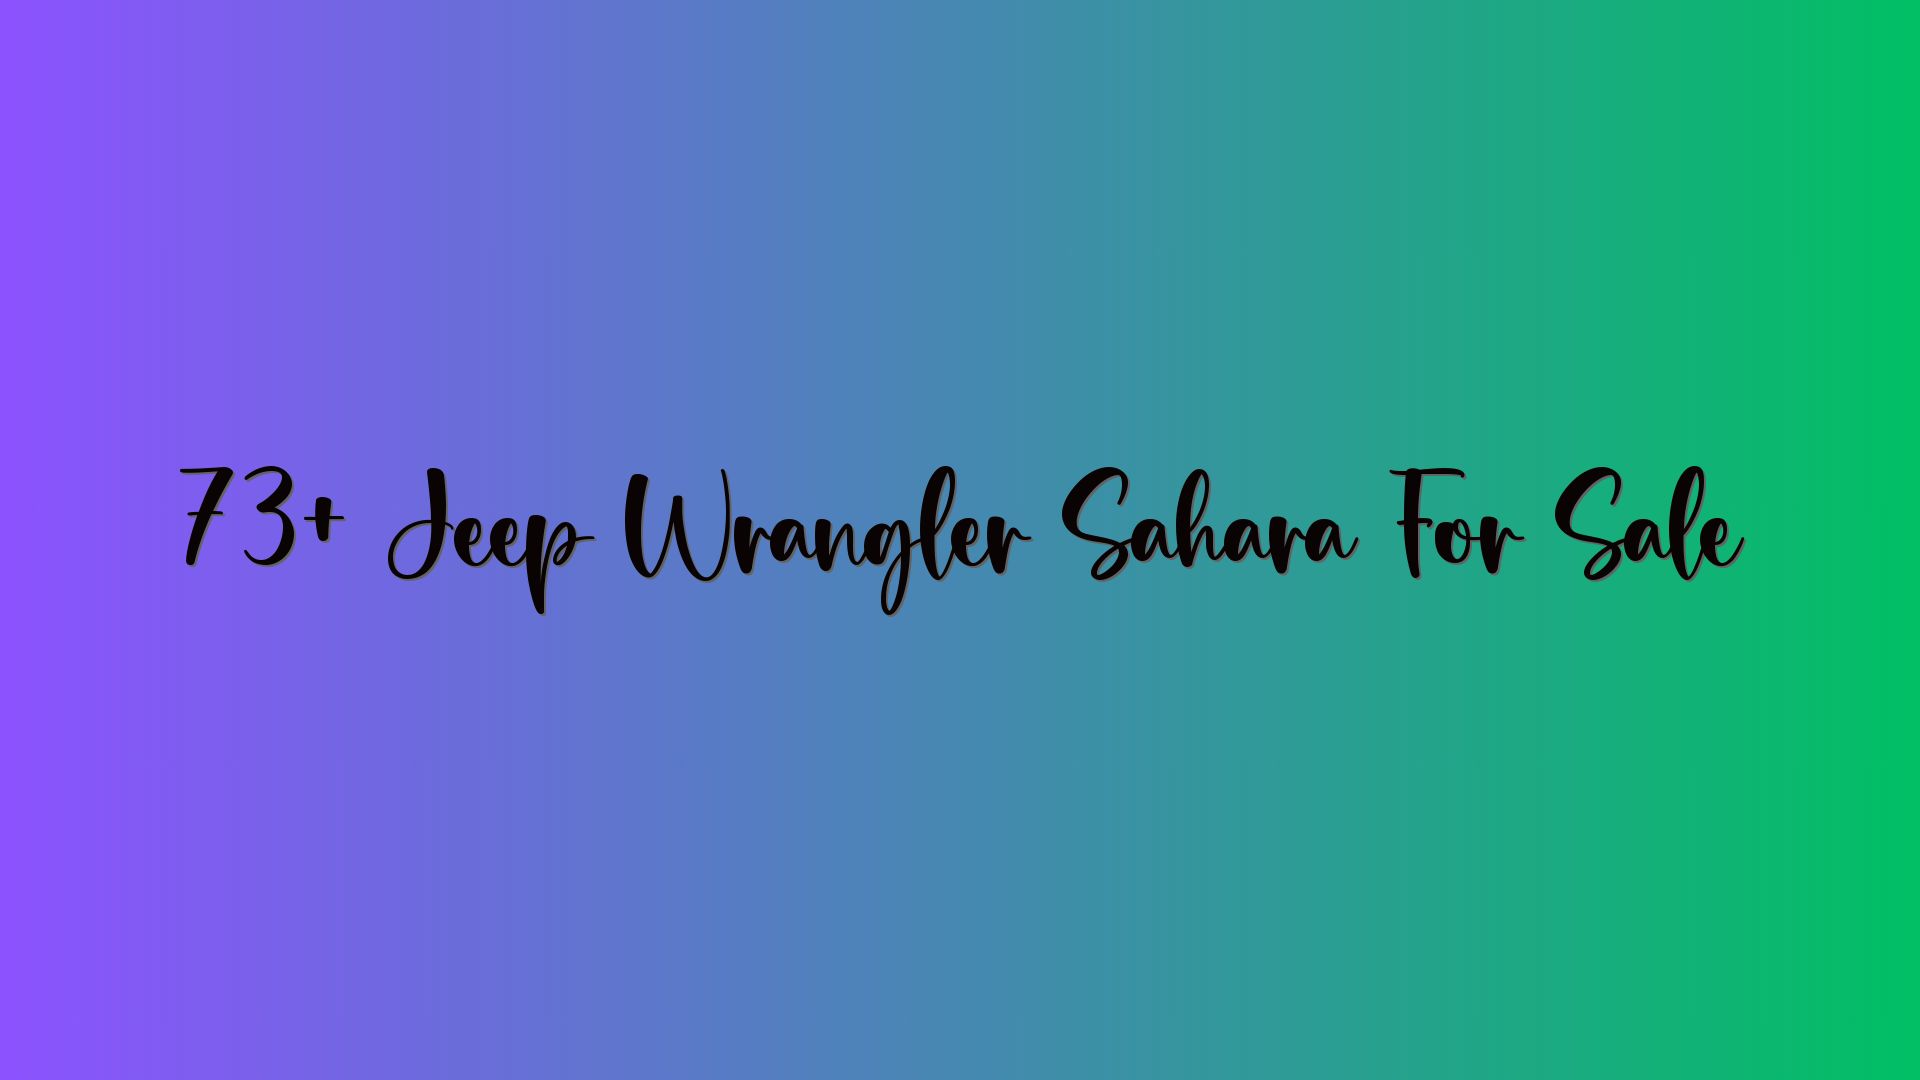 73+ Jeep Wrangler Sahara For Sale